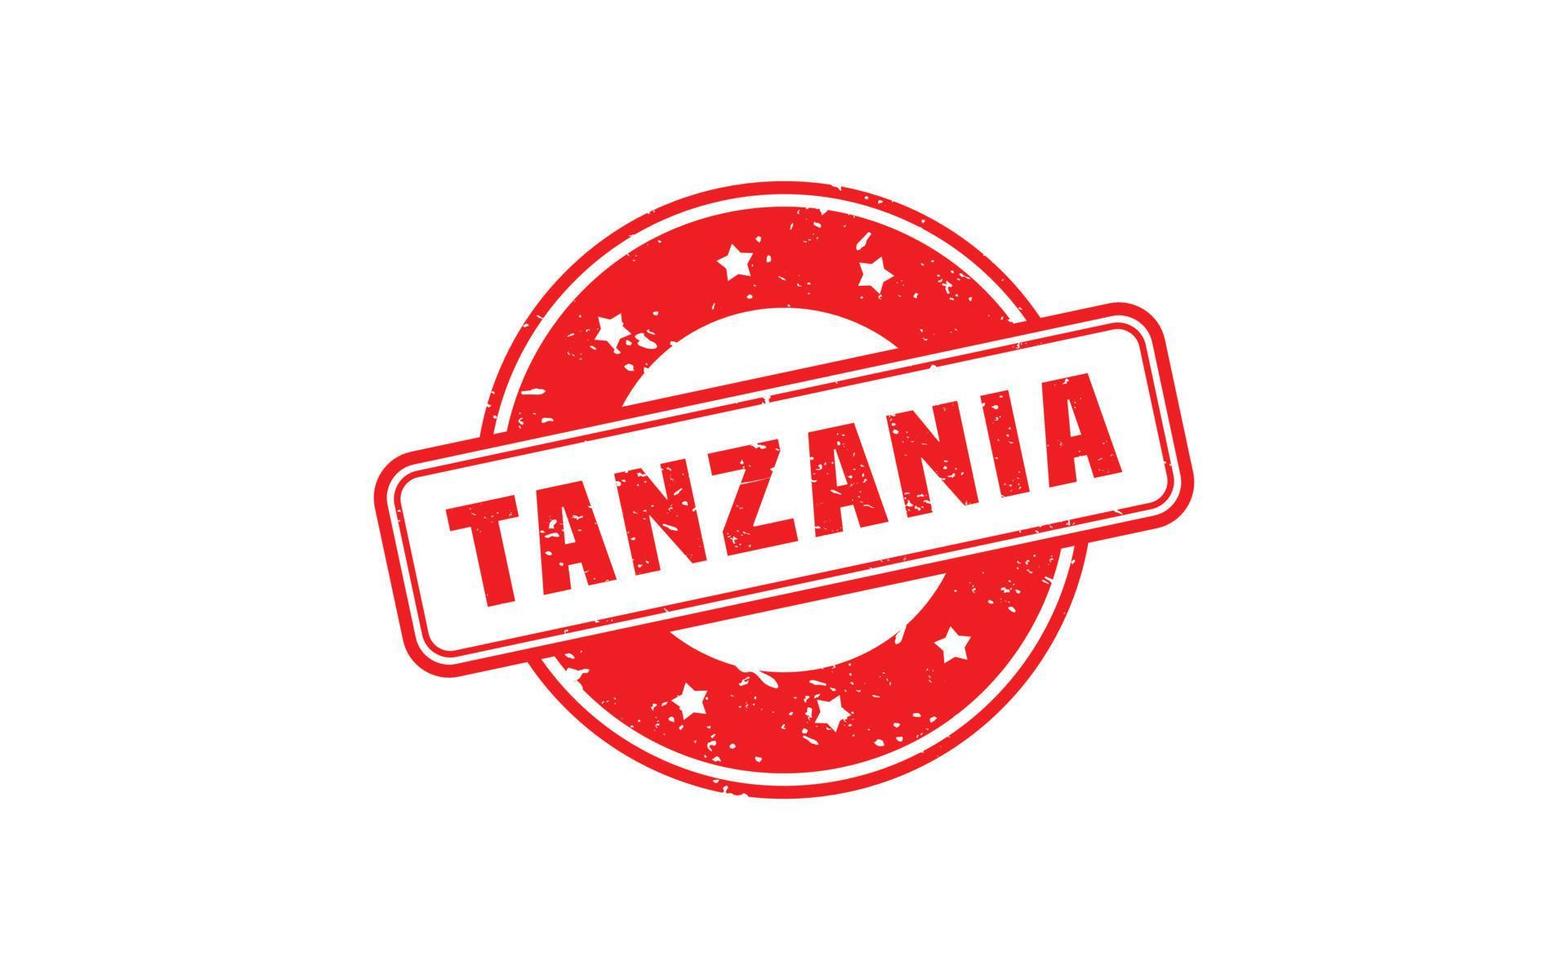 carimbo de borracha da Tanzânia com estilo grunge em fundo branco vetor